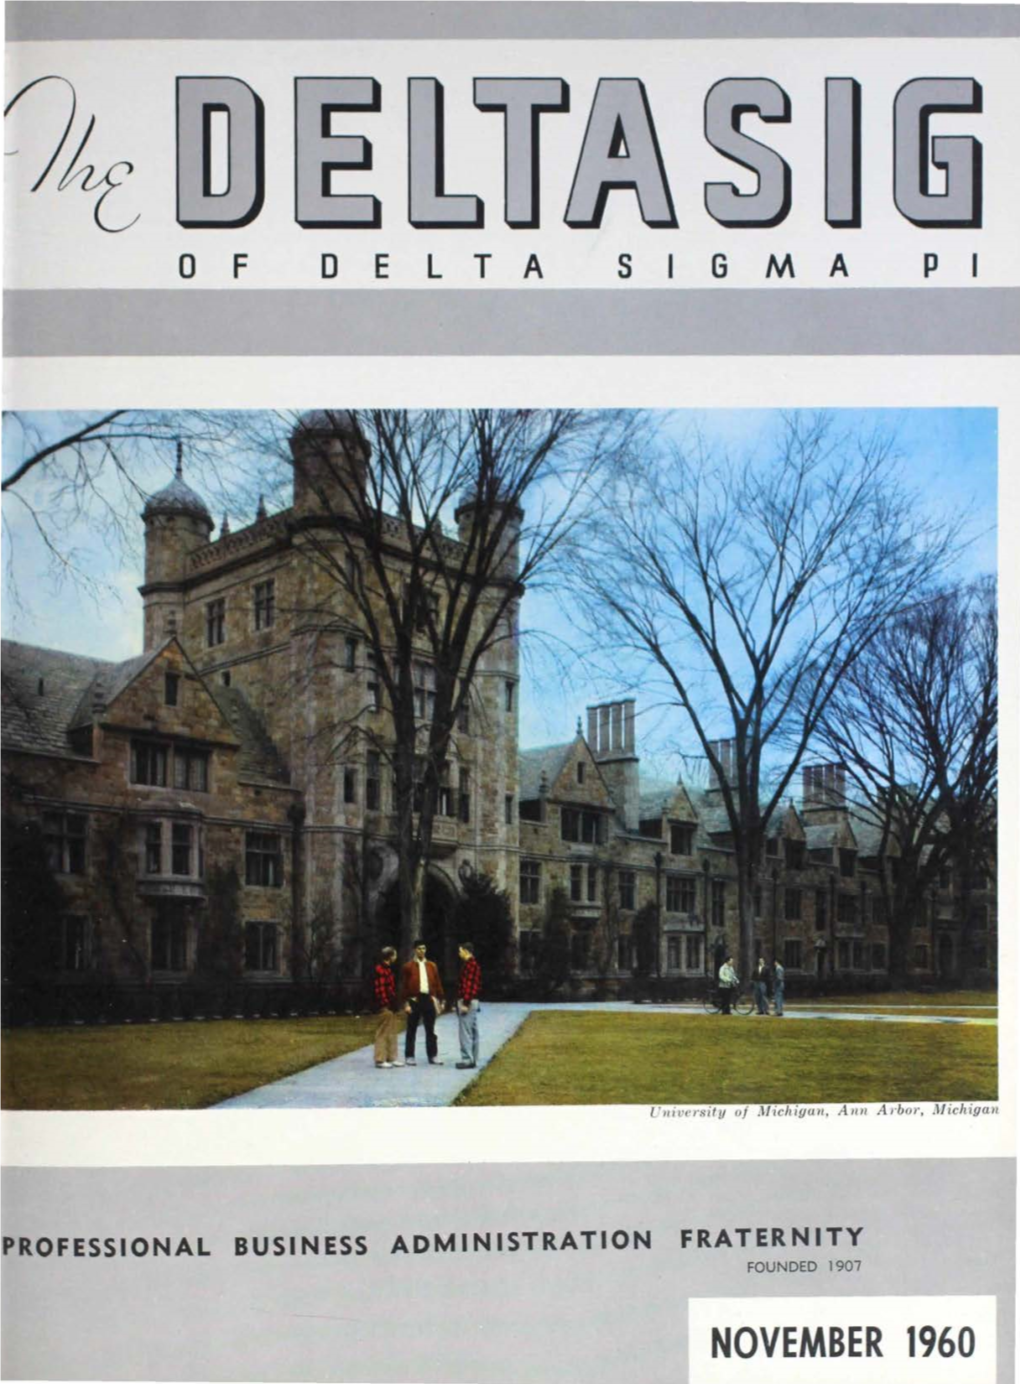 NOVEMBER 1960 the International Fraternity of Delta Sigma Pi